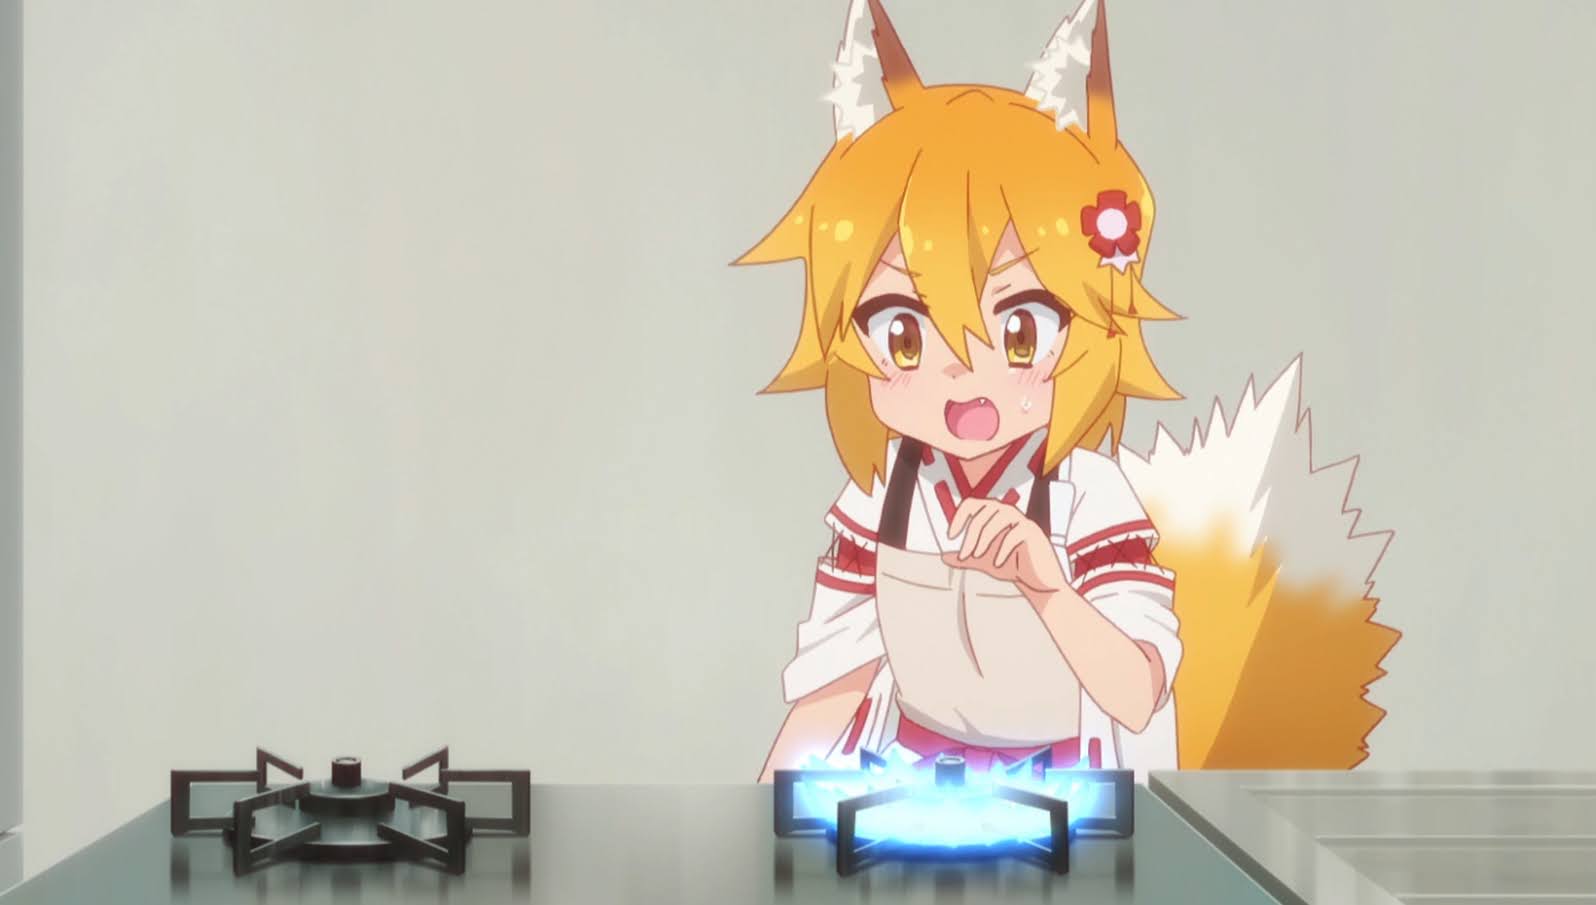 Sora the helpful Fox Senko.